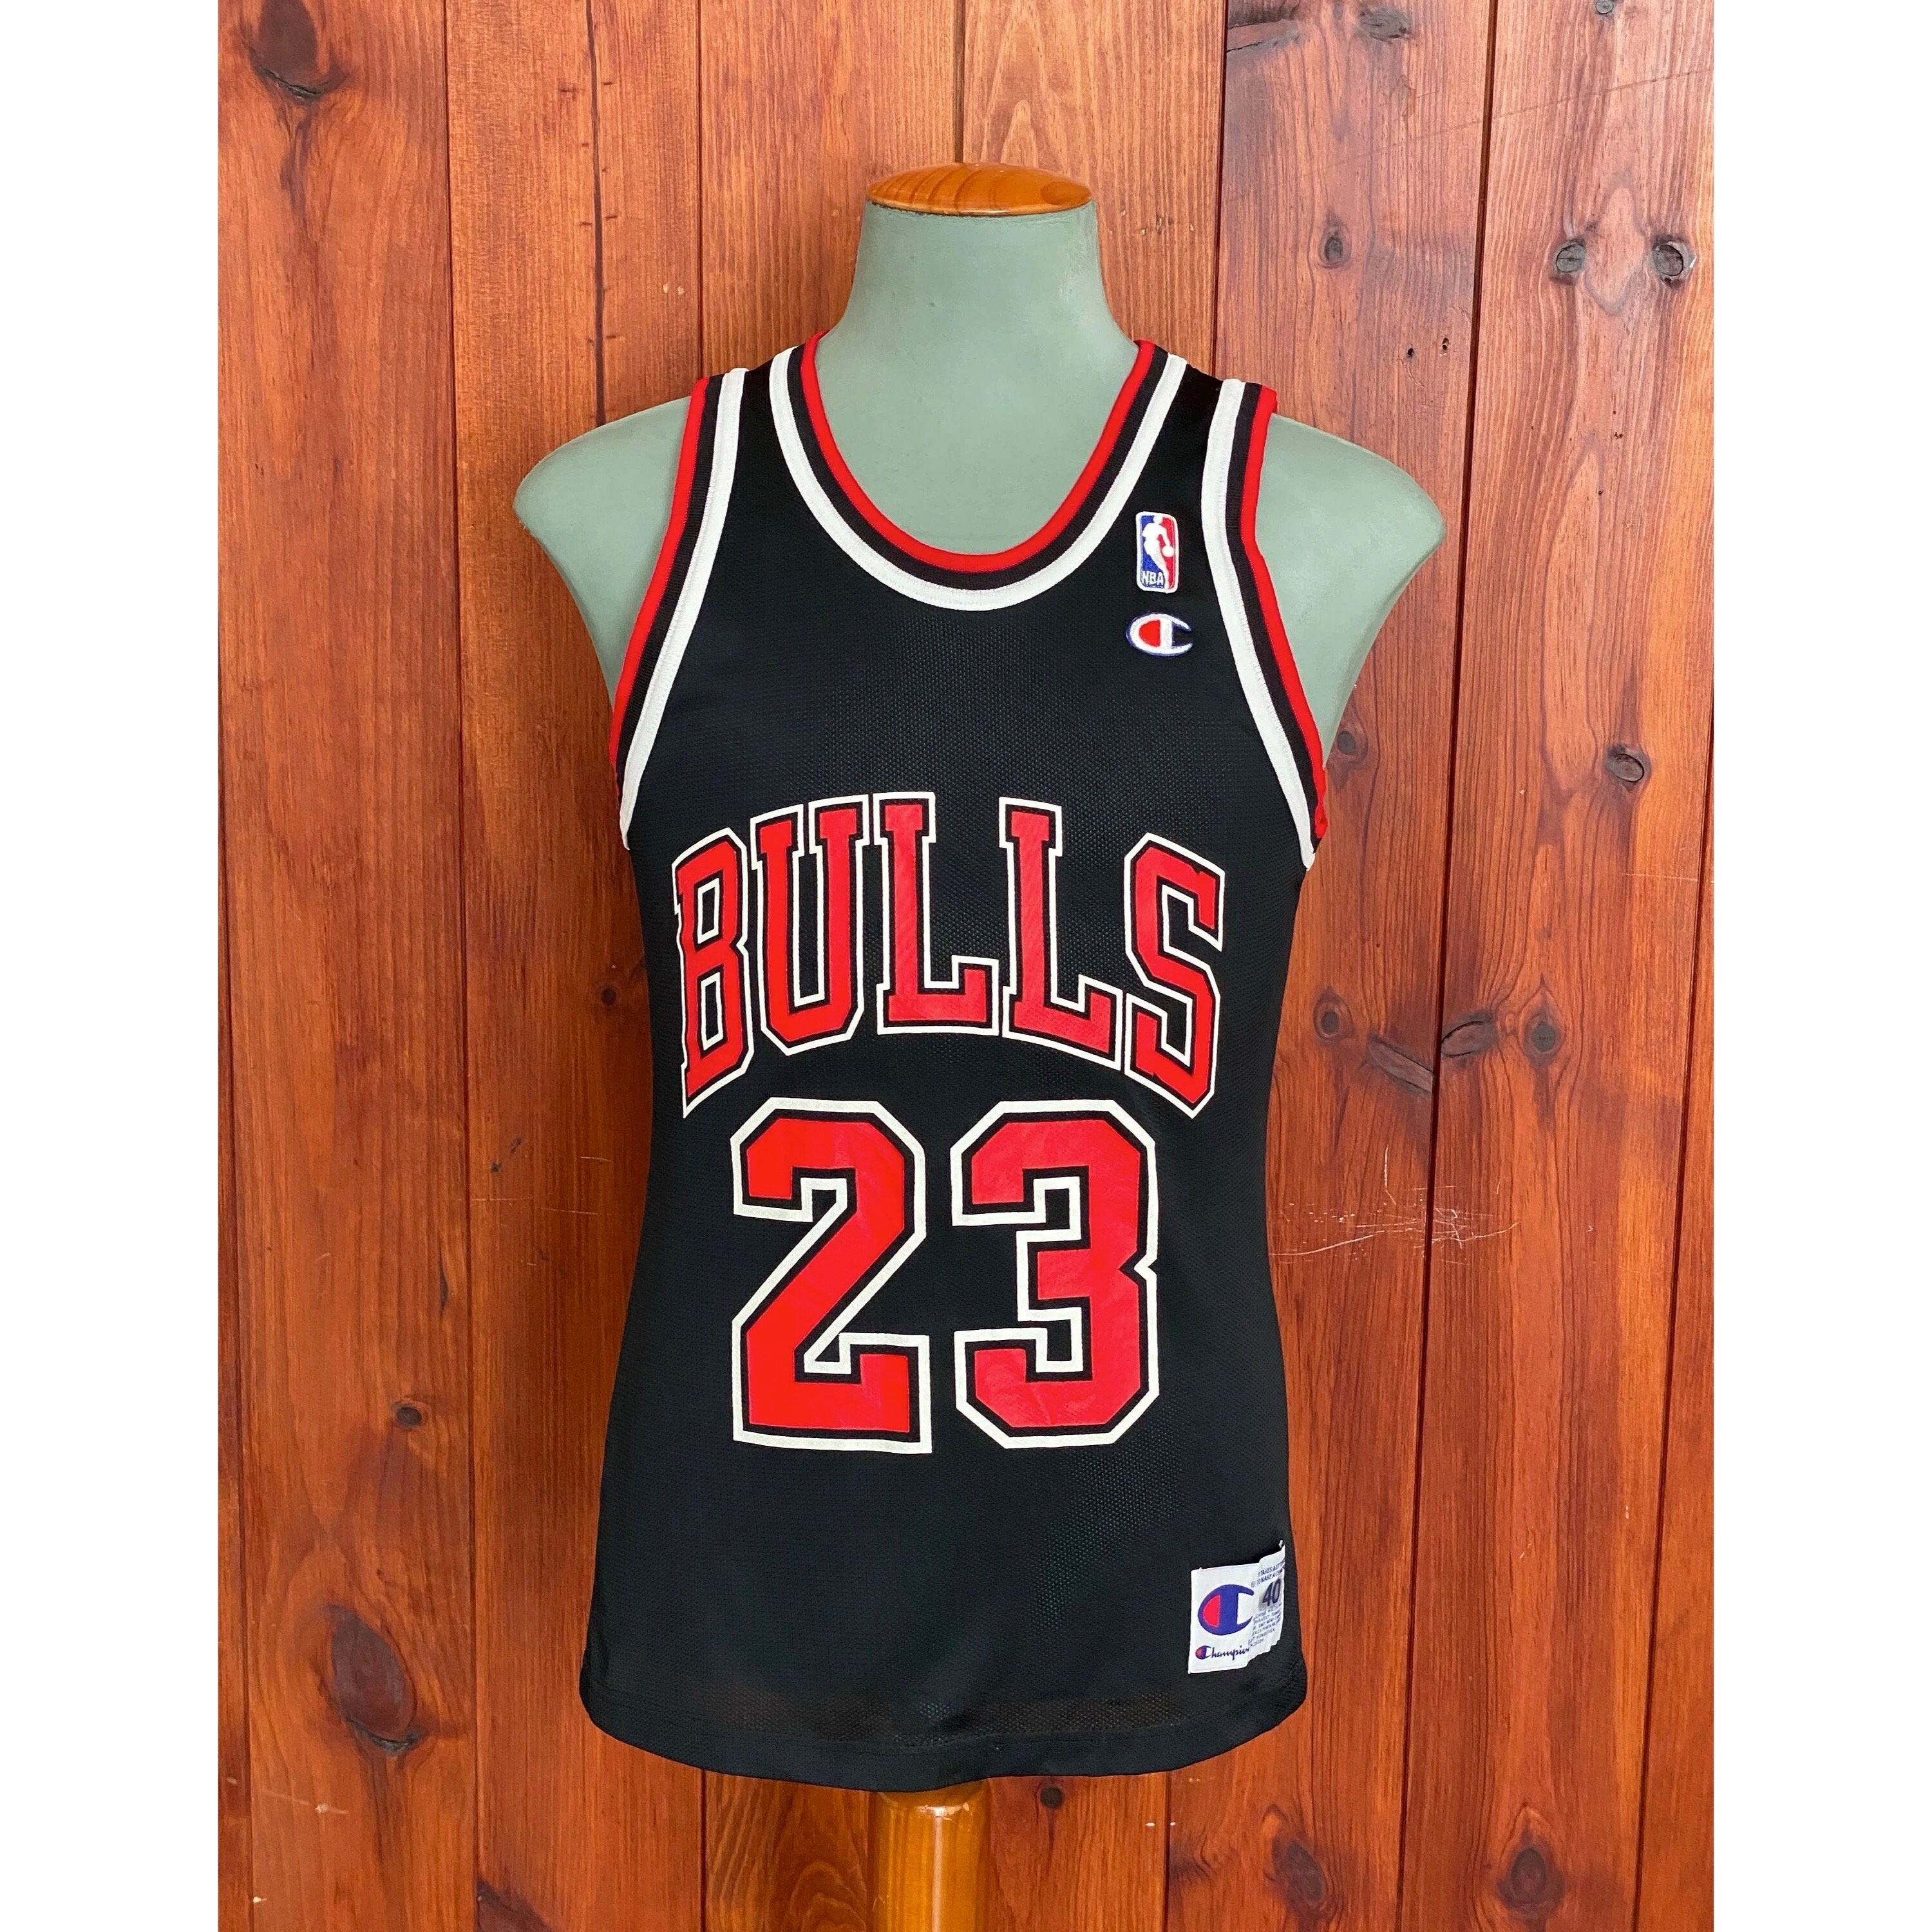 Buy Size 40. VTG 91/92 NBA Champion Jordan Jersey Chicago Bulls